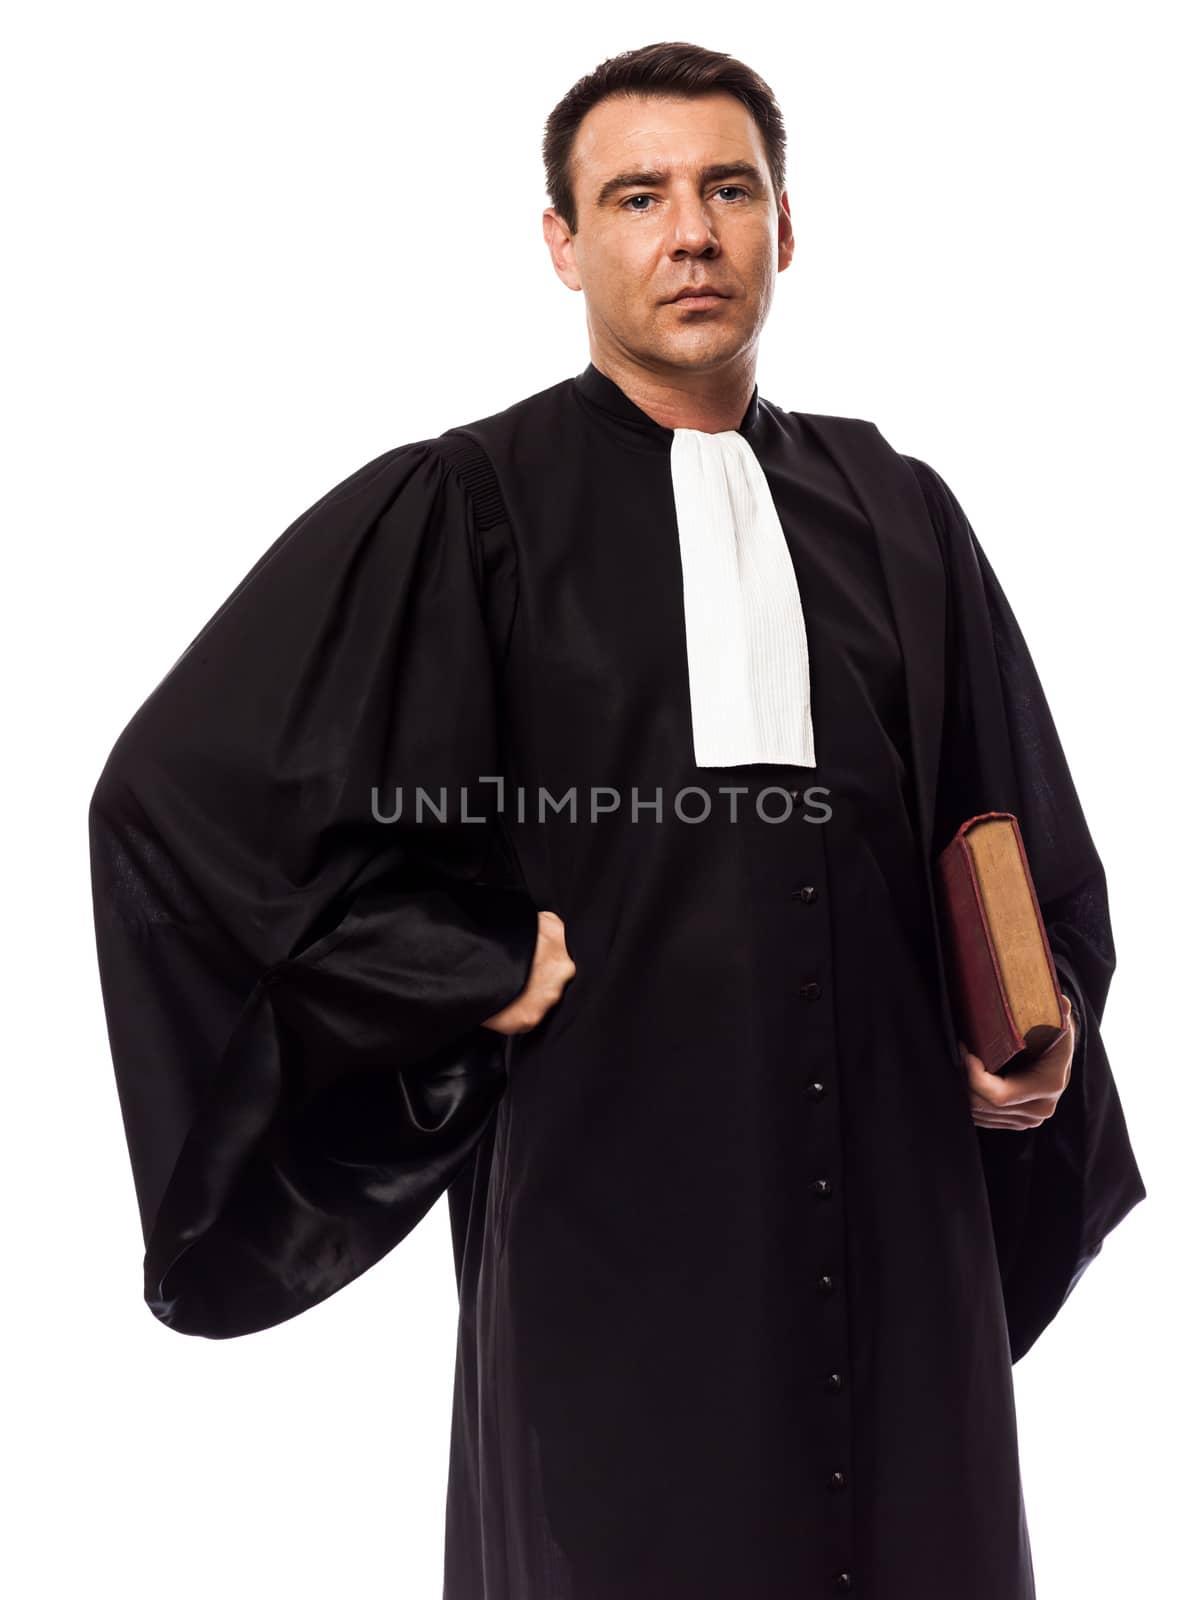 lawyer man portrait by PIXSTILL